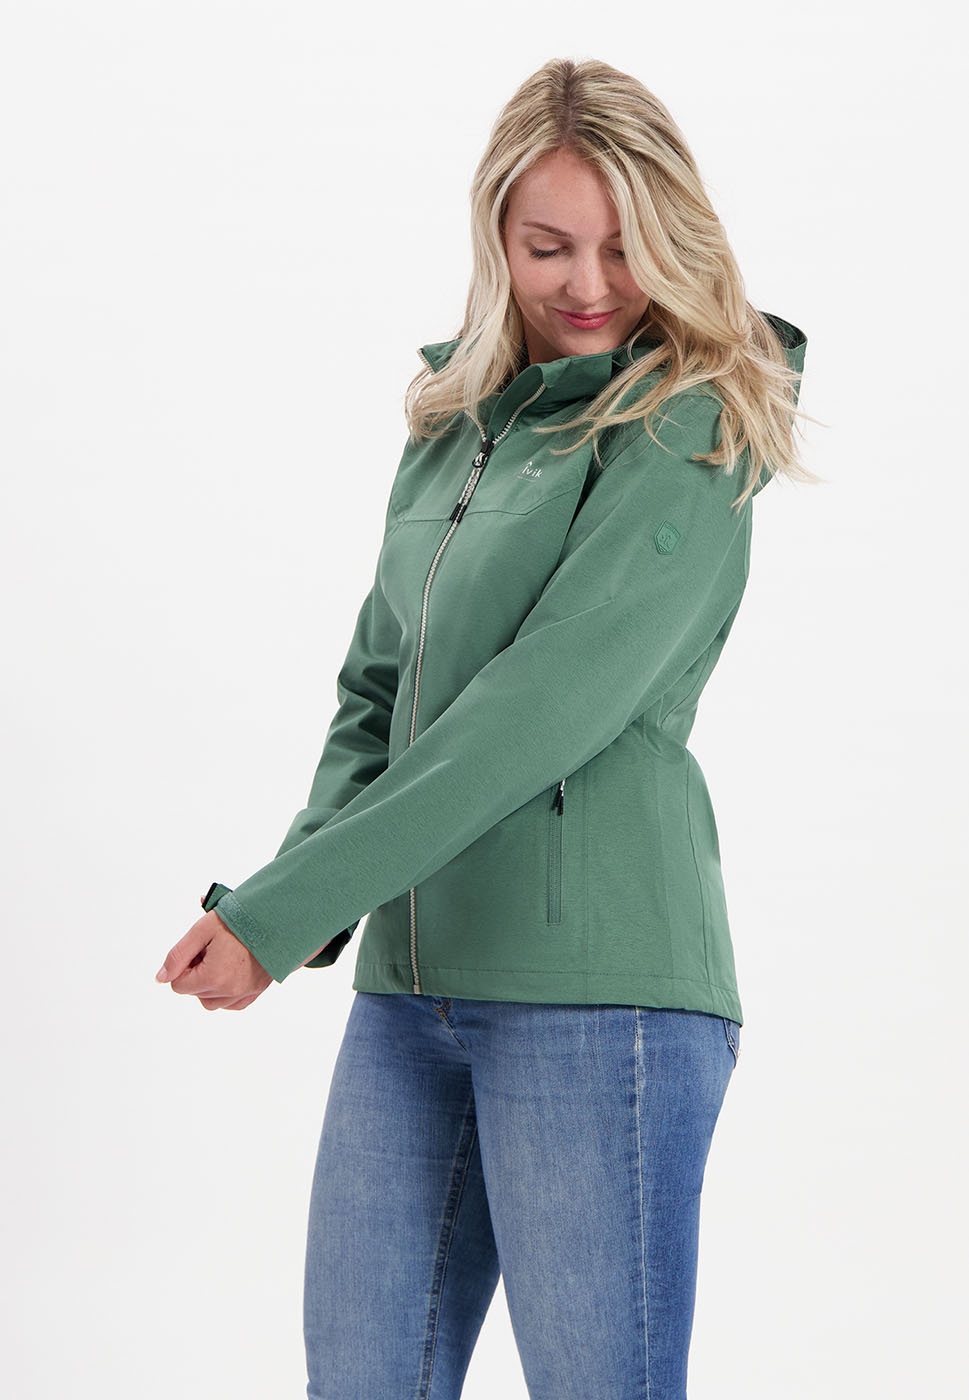 Kjelvik Scandinavian Clothing - Women Jackets Fara Green